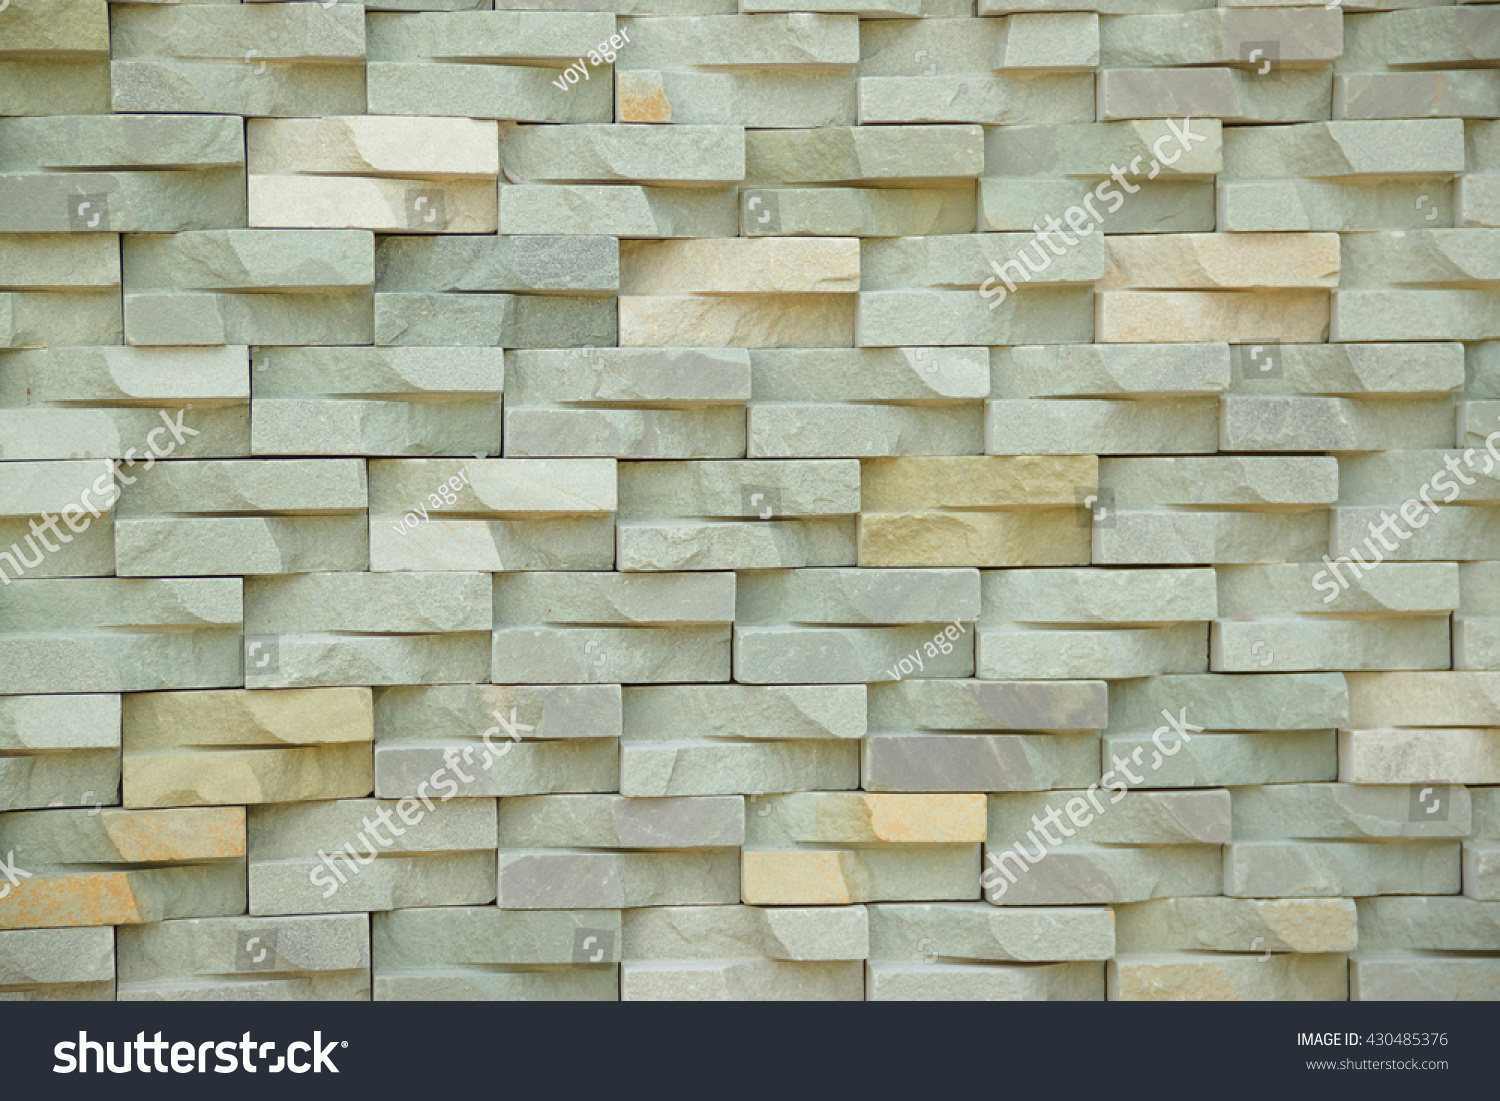 Art sandstone texture background, natural surface #430485376